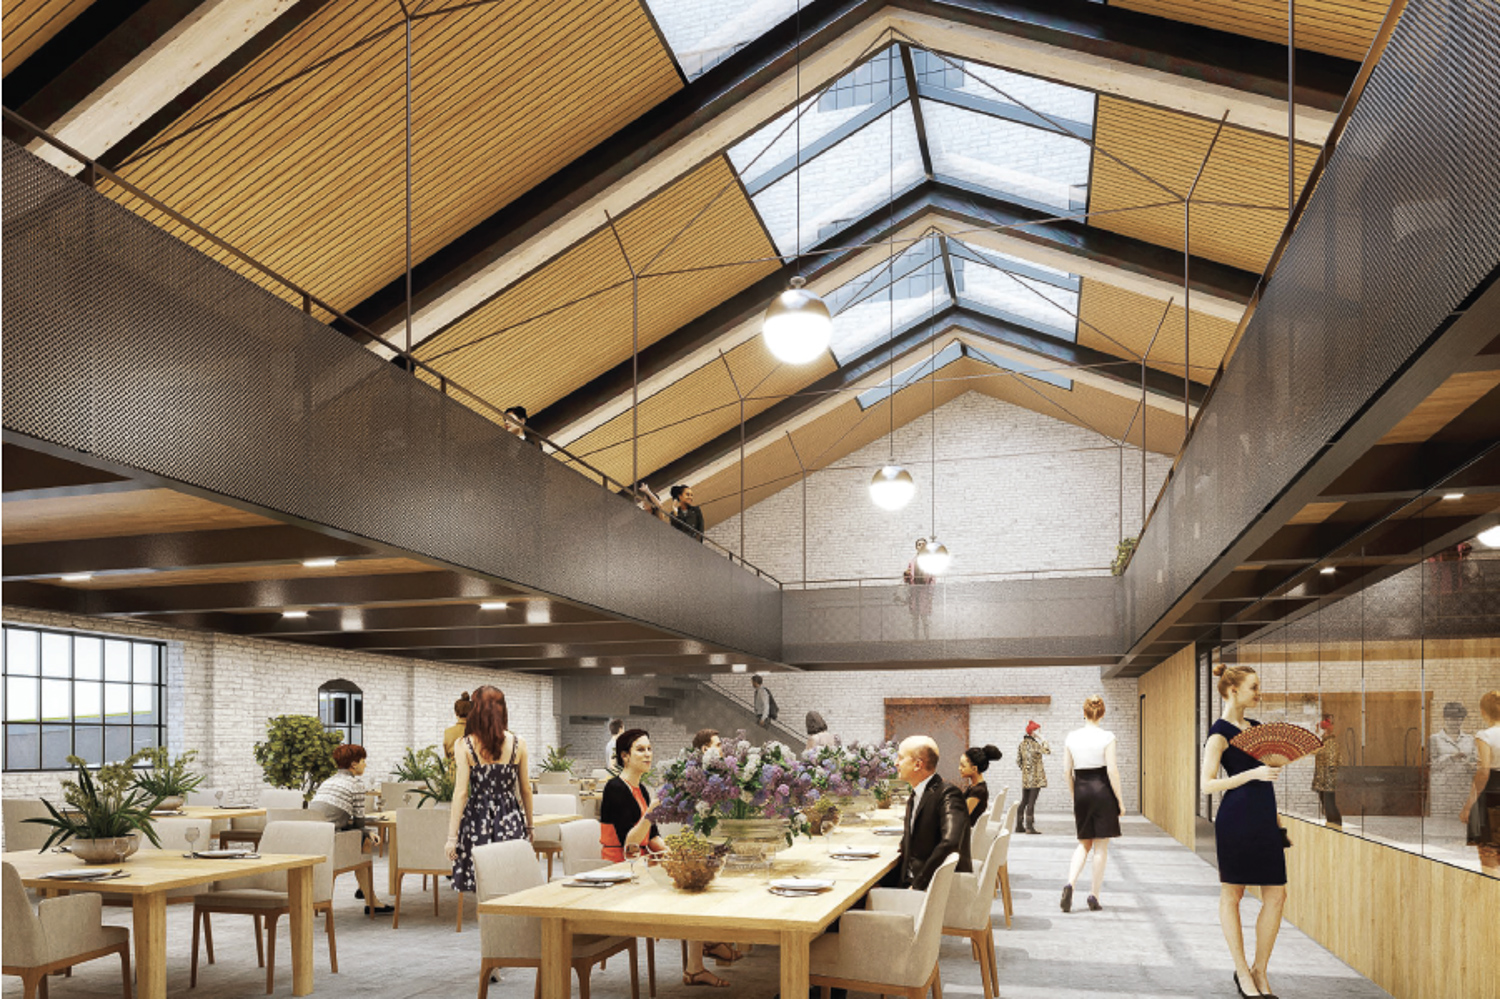 Maclac Building dining room, rendering via Comstock Realty Partners